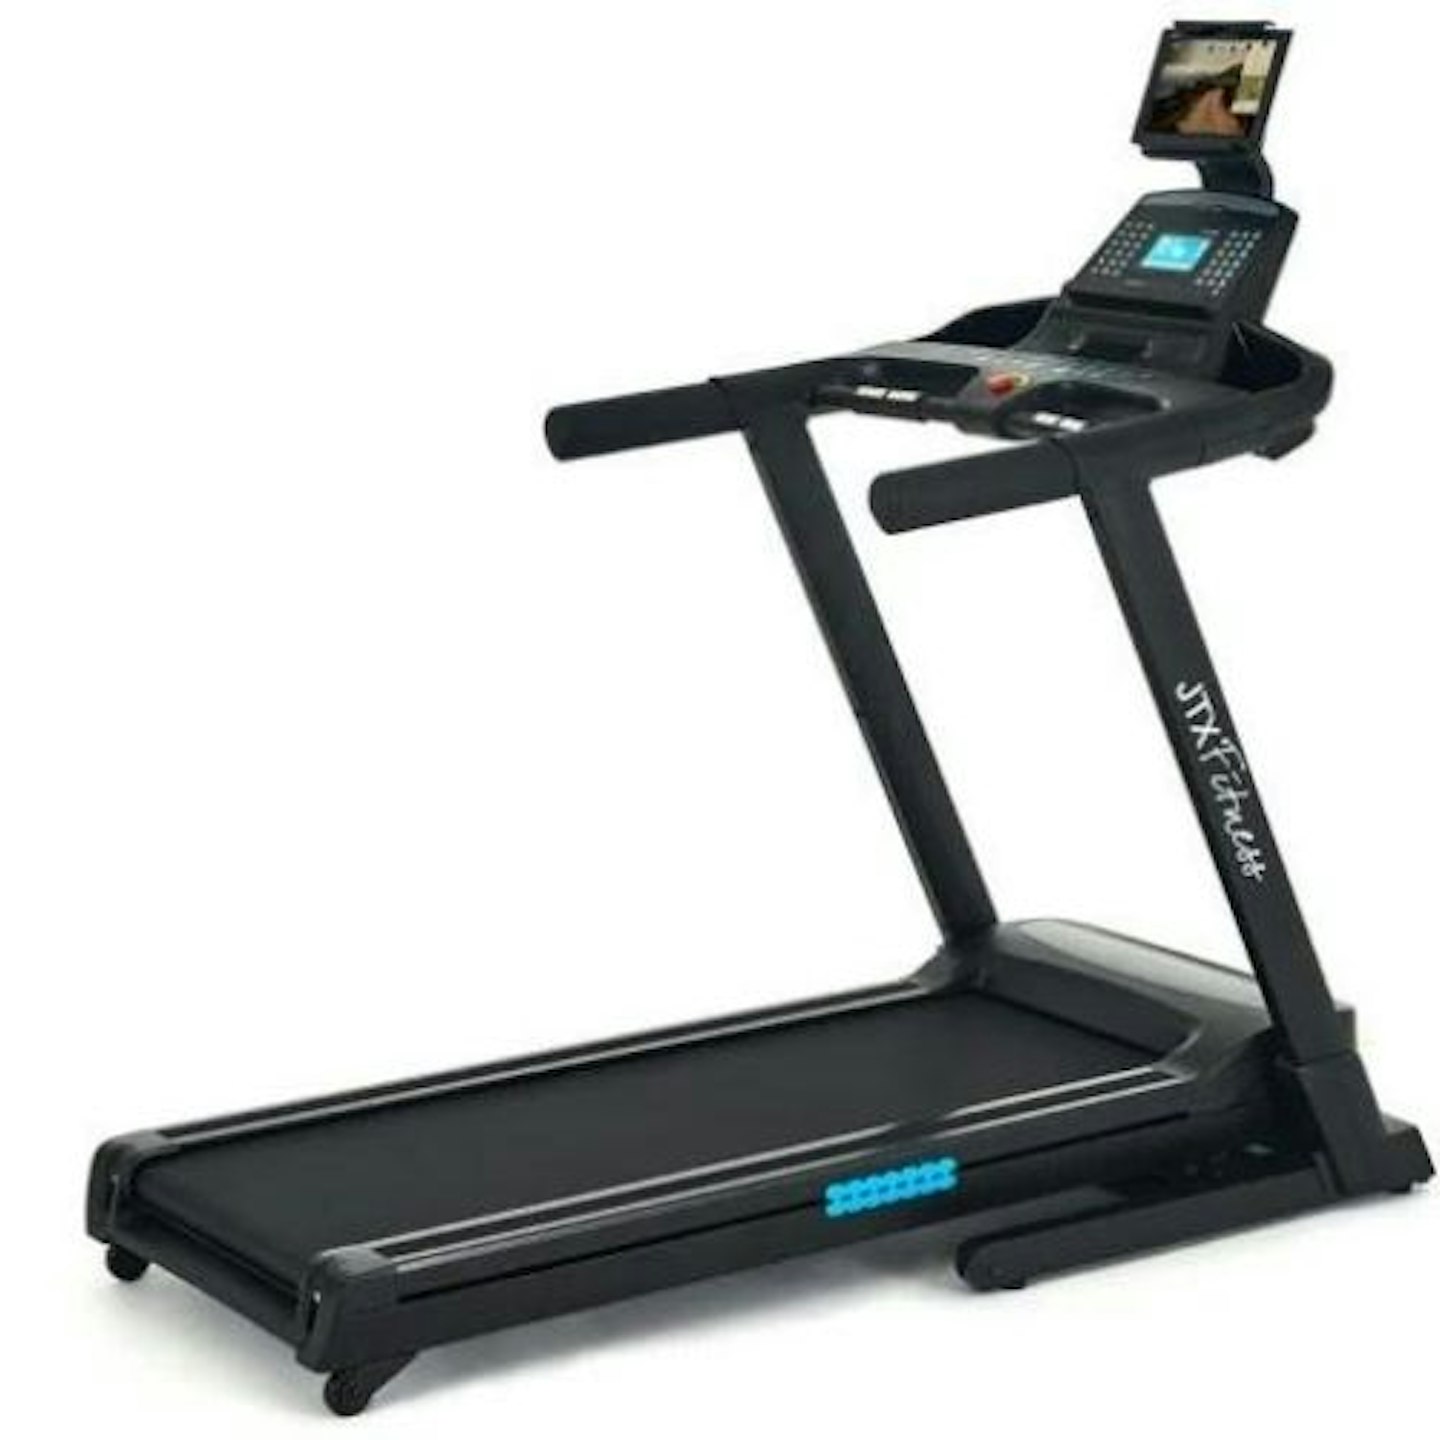 JTX Sprint-5 Home Treadmill